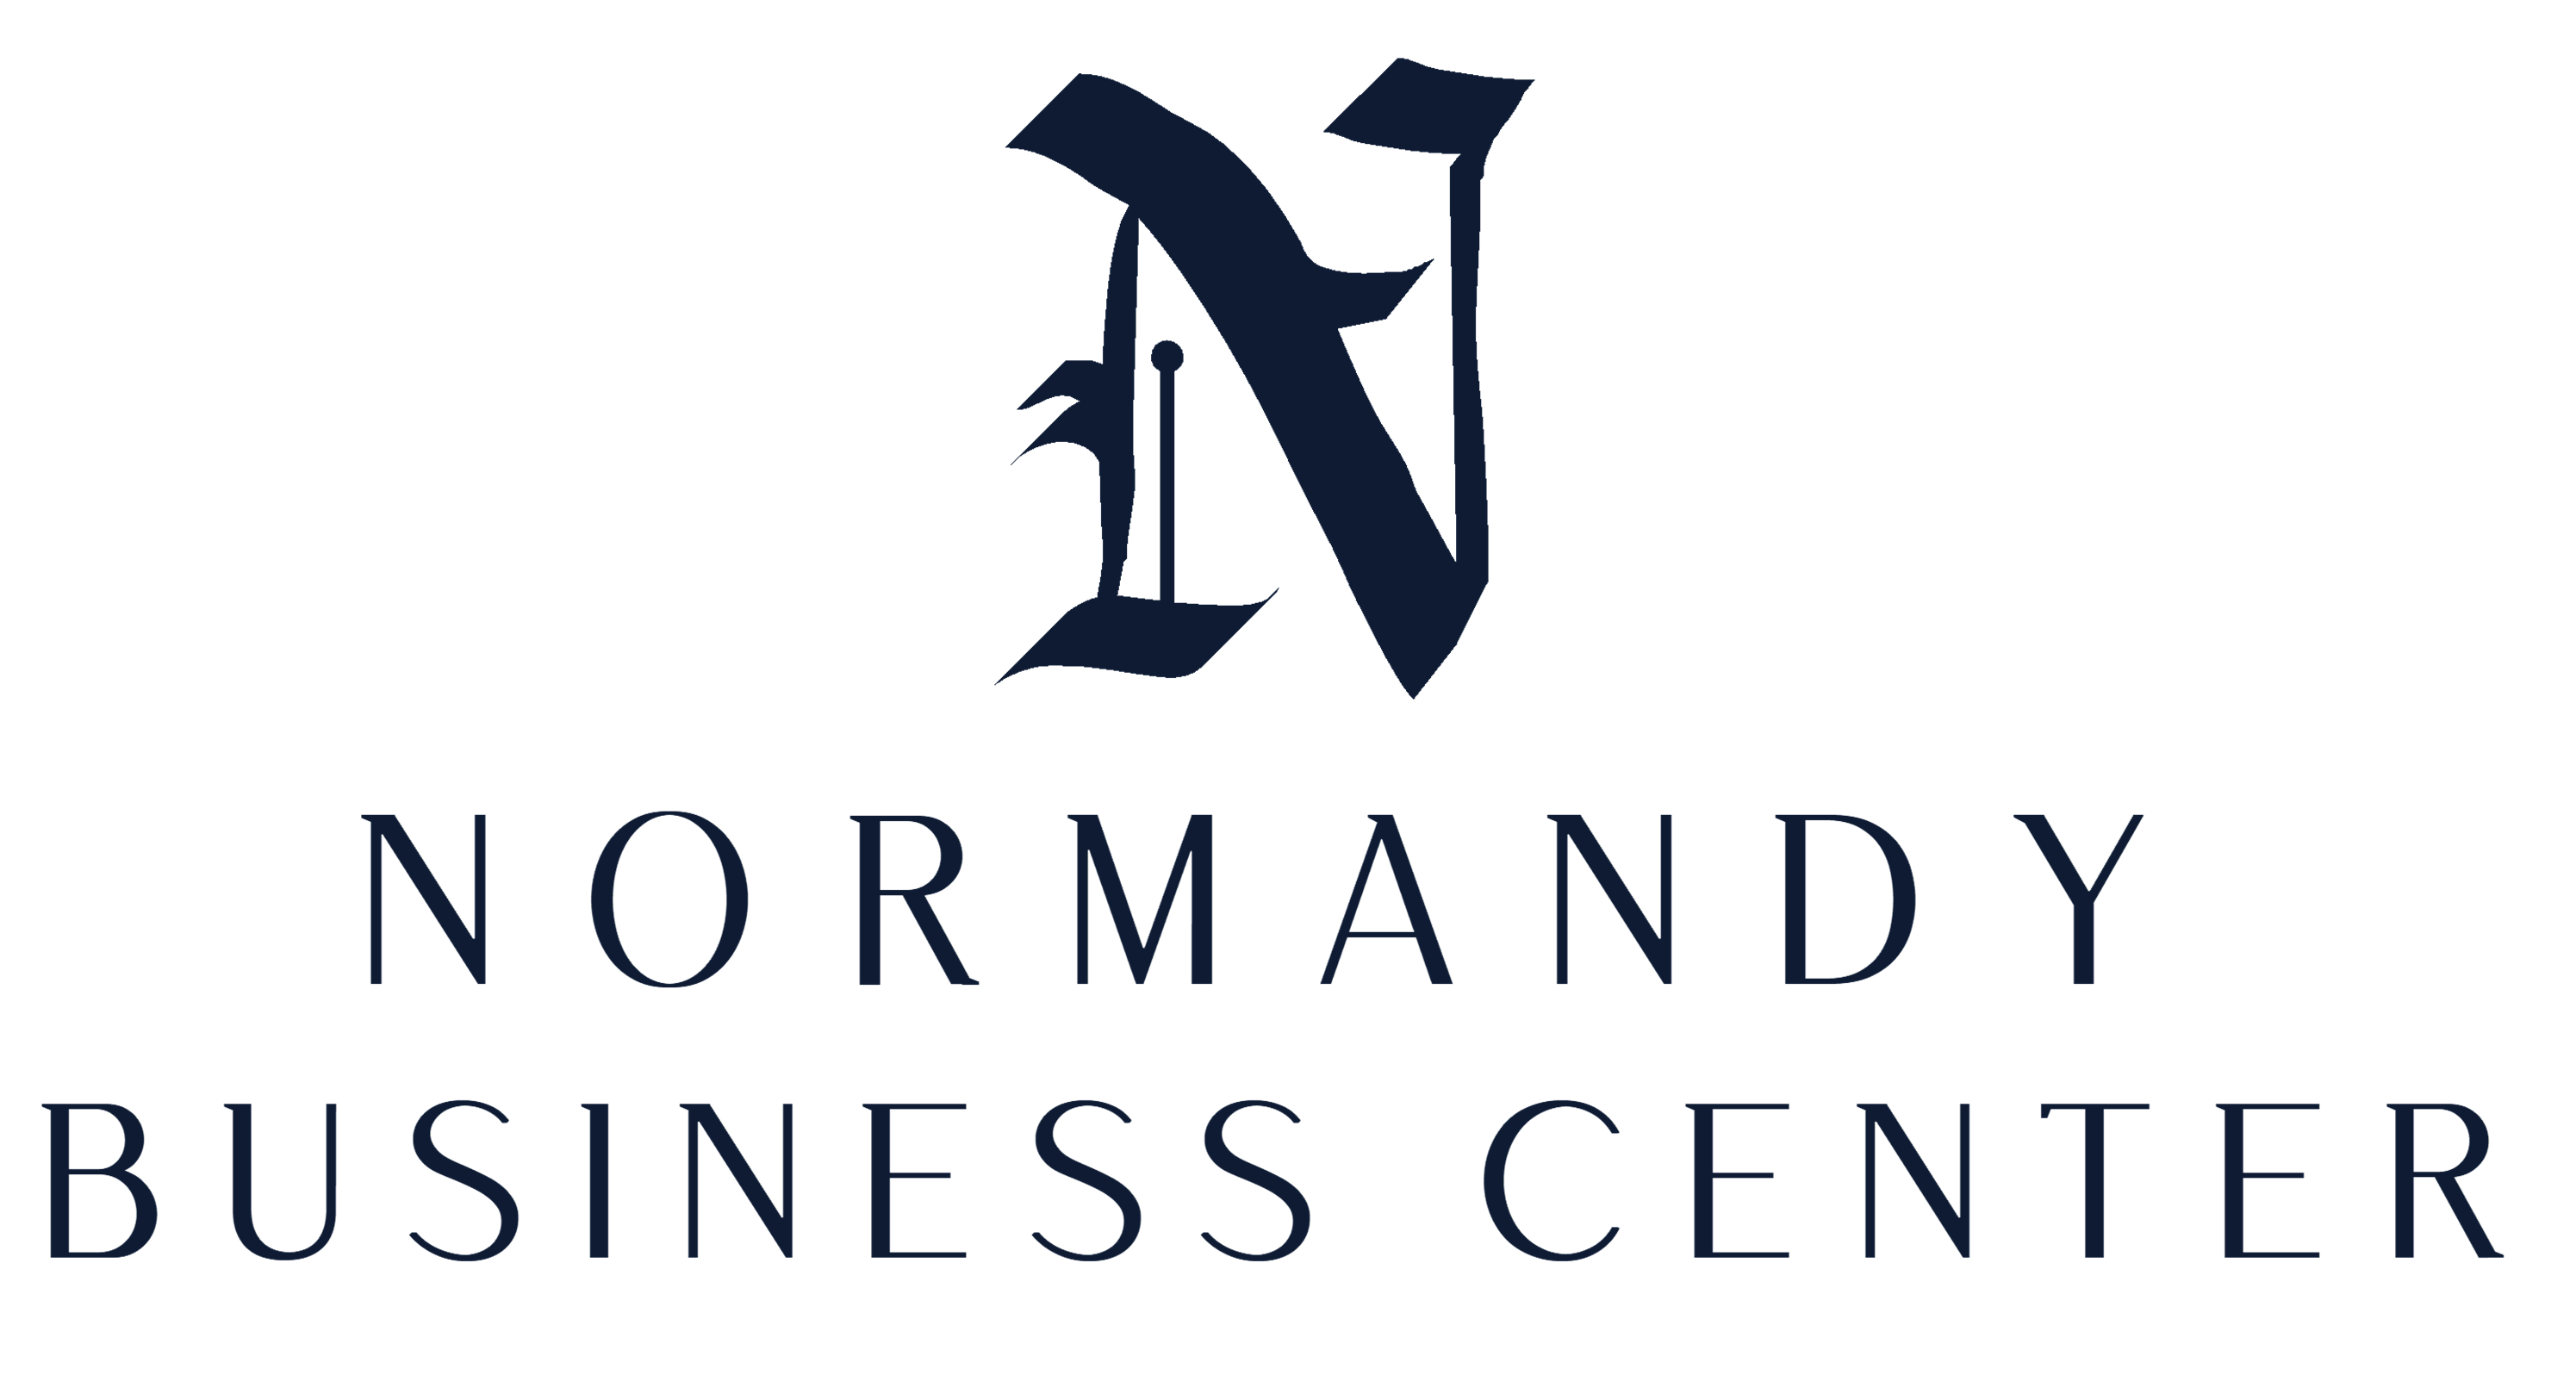 Normandy Business Center